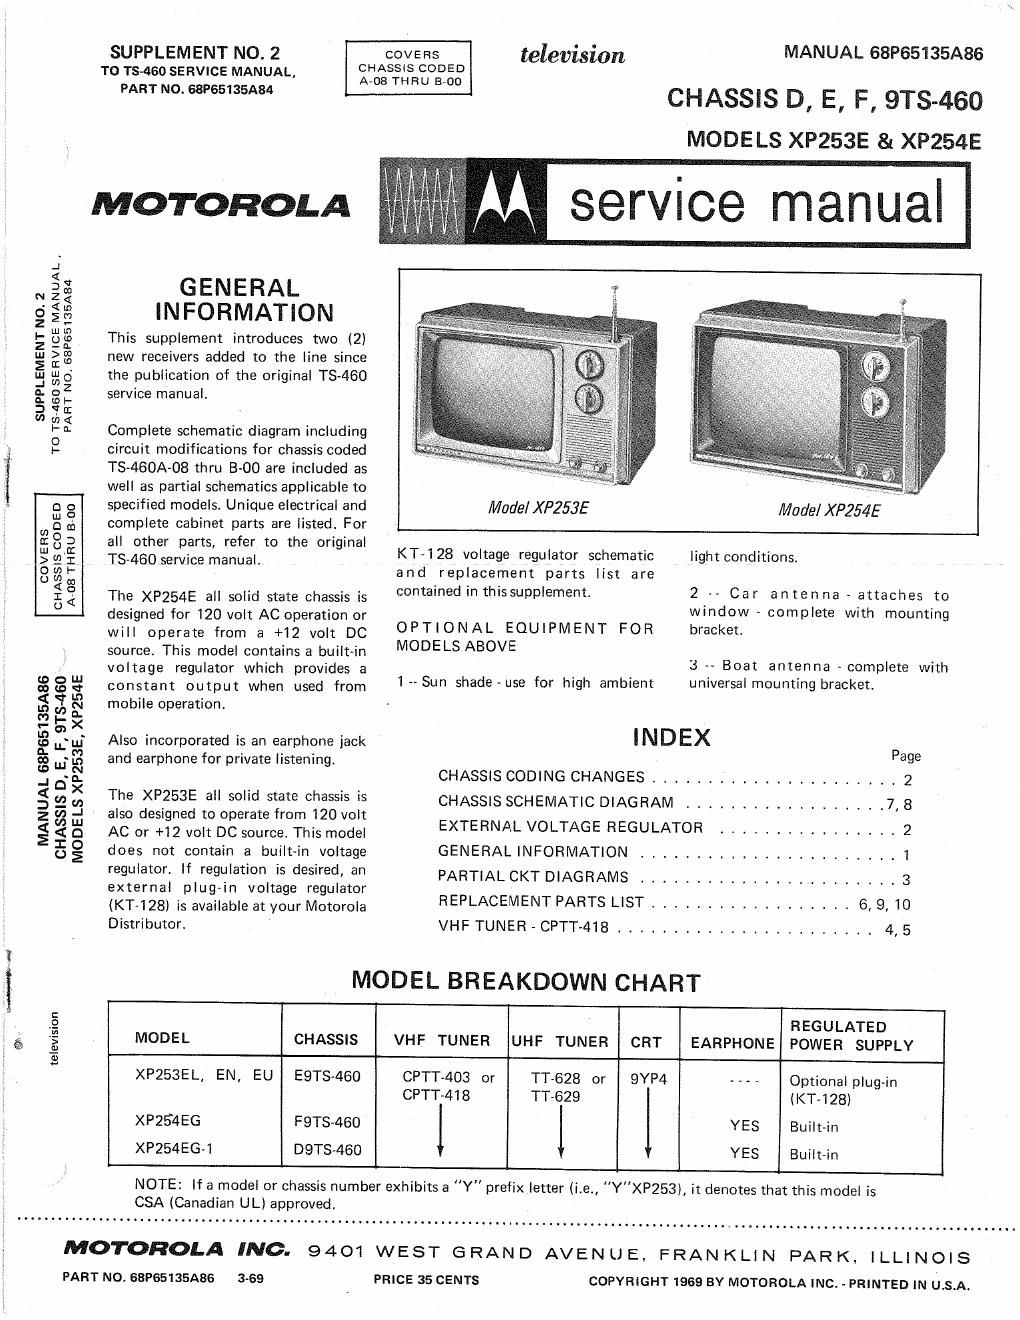 motorola xp 254 e service manual